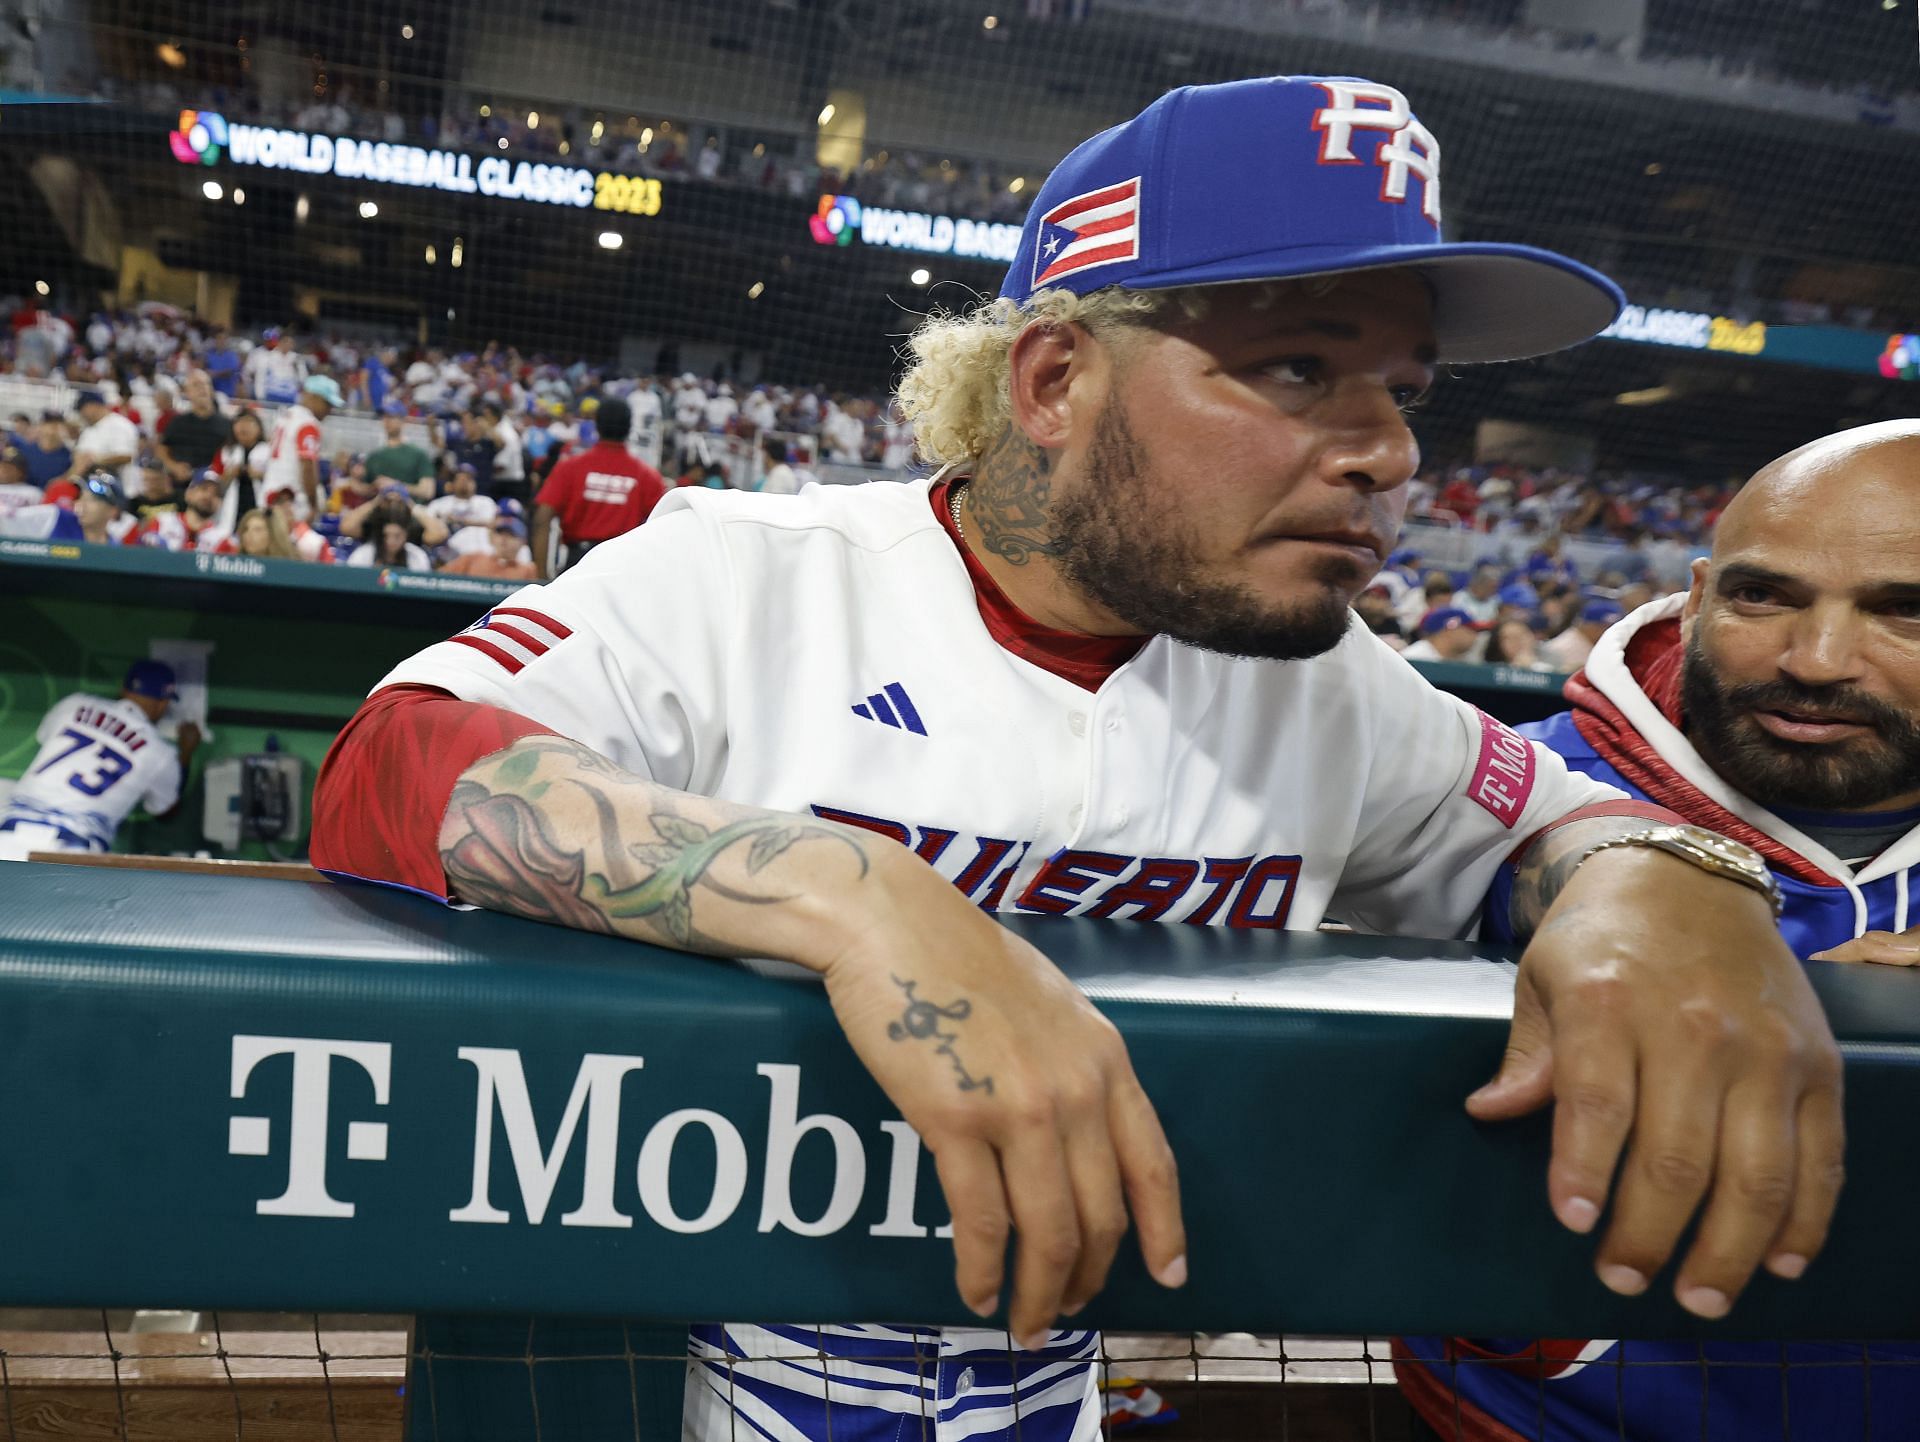 Puerto Rico breaks world record as baseball fans go blond